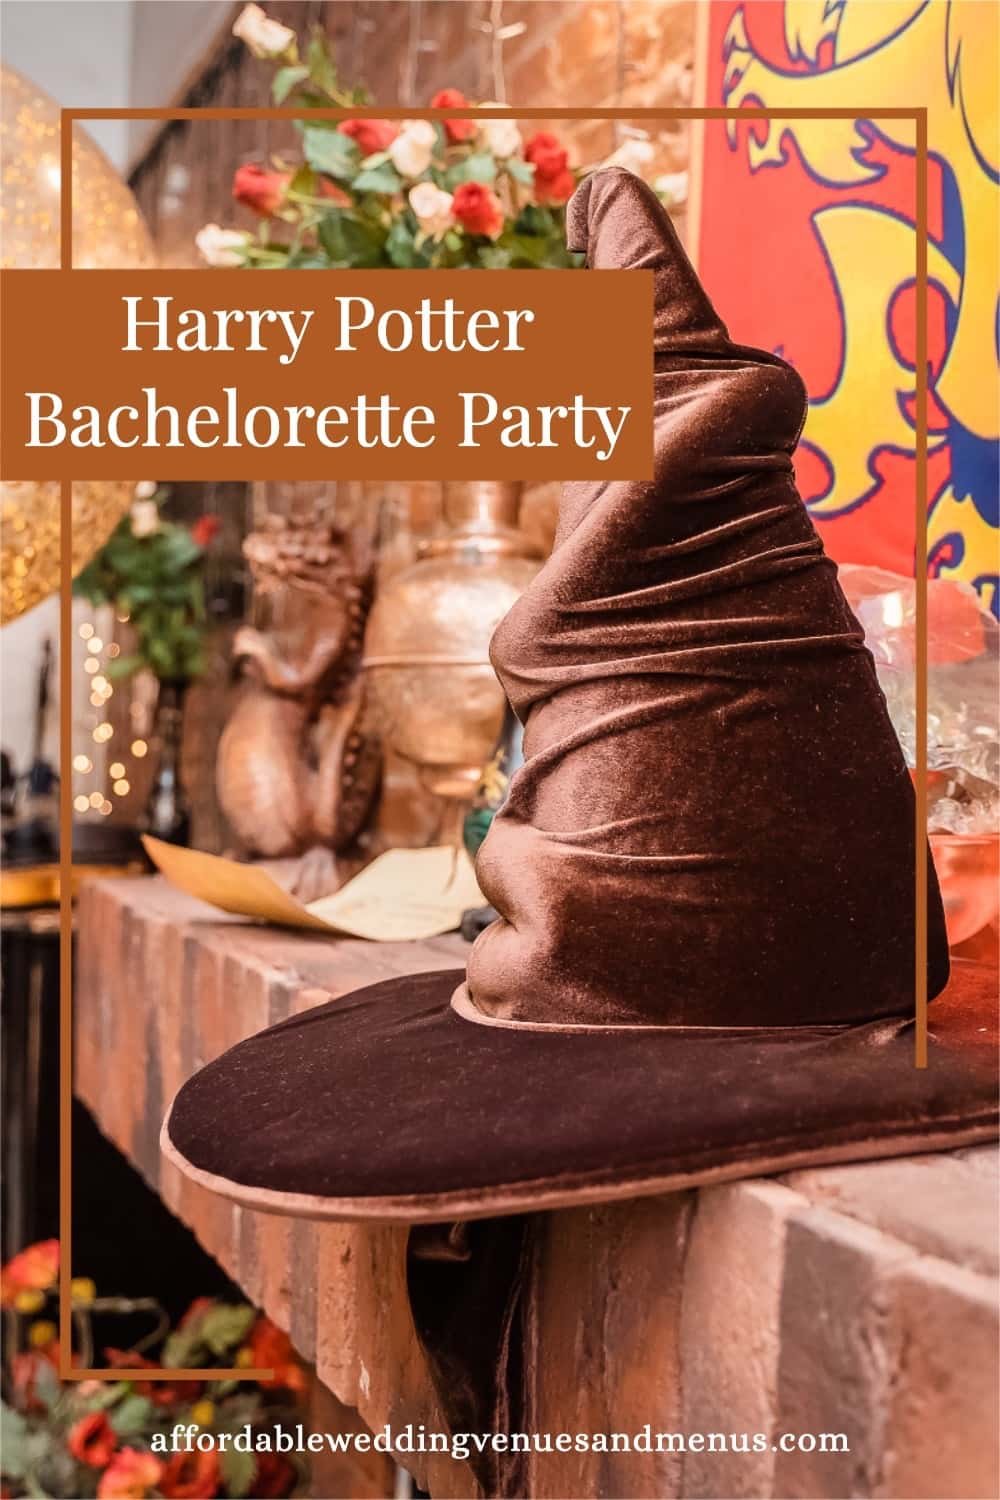 Harry Potter Bachelorette Party: Magical Ideas, Favors and Decorations